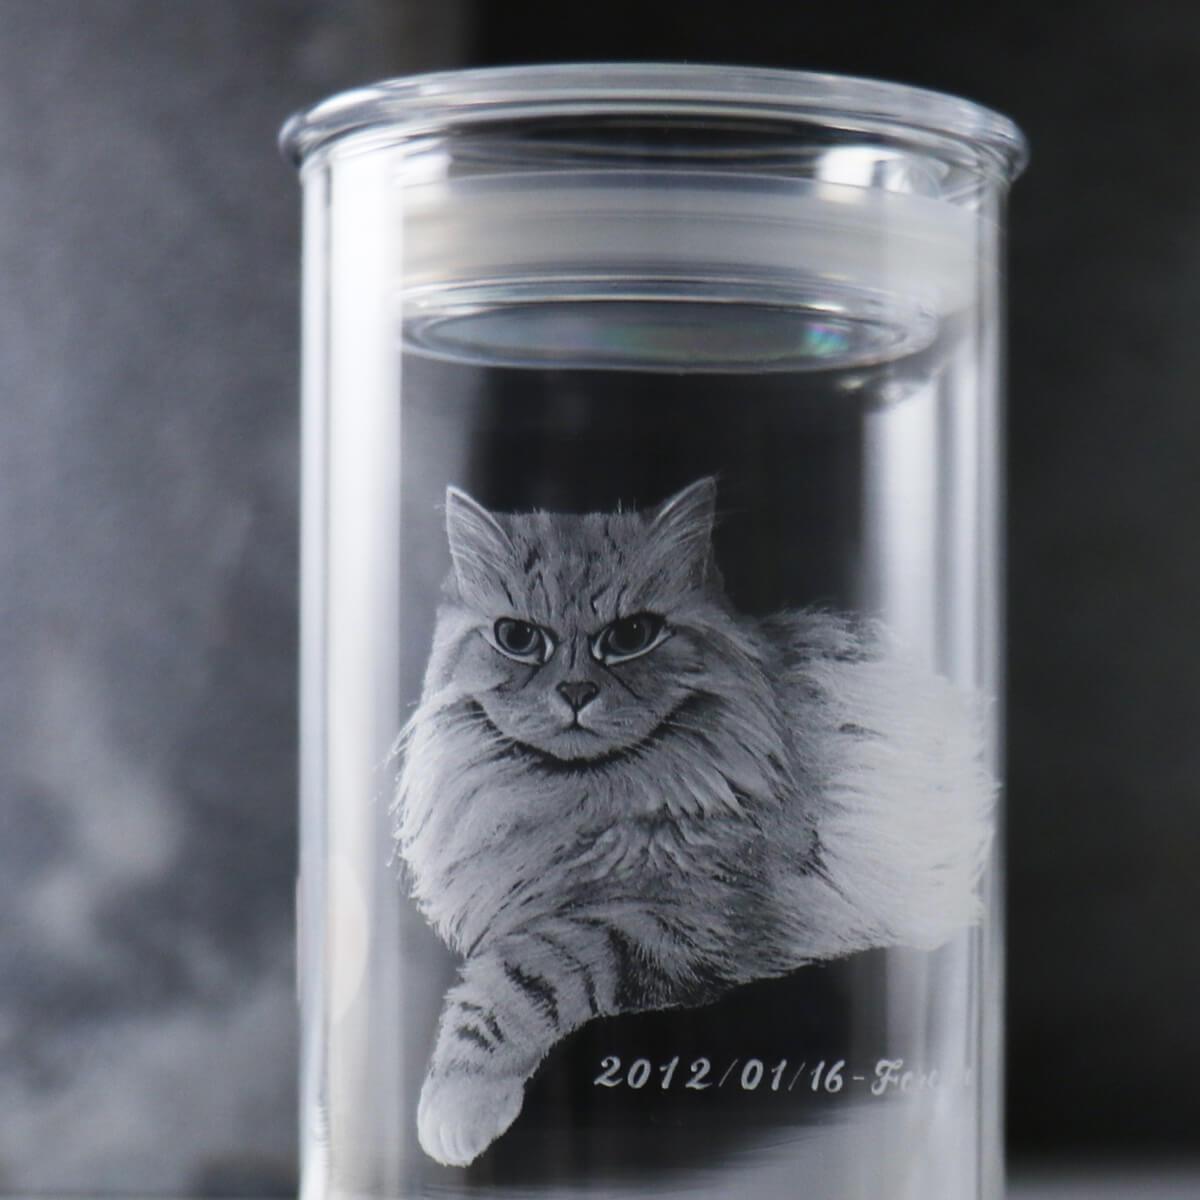 14cm【寵物骨灰罐】毛小孩在天堂明亮純淨的家 畫像訂做 貓咪 - MSA玻璃雕刻